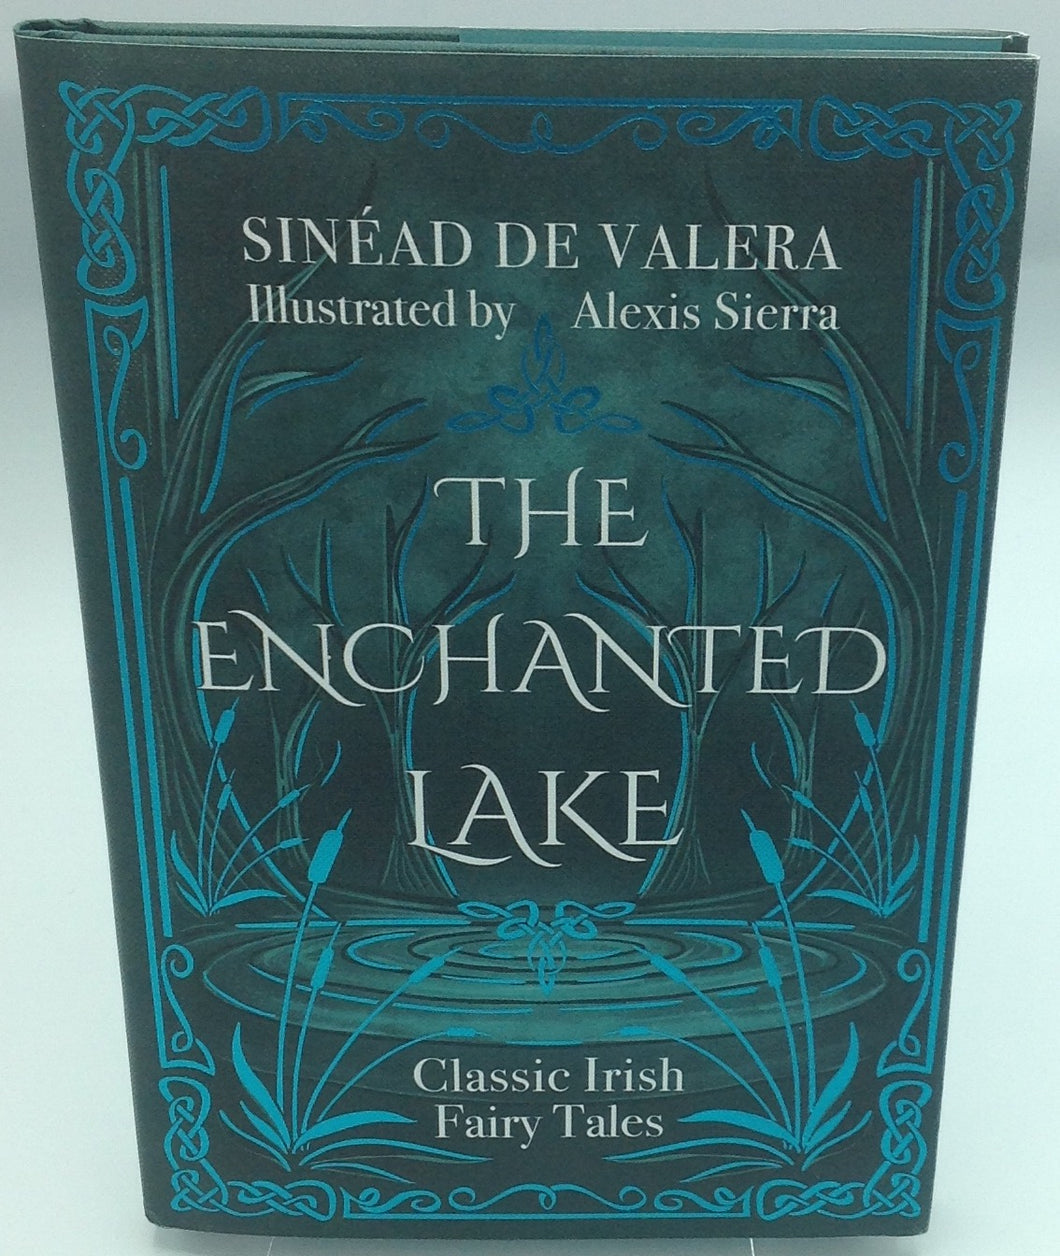 The Enchanted Lake by Sinead de Valera